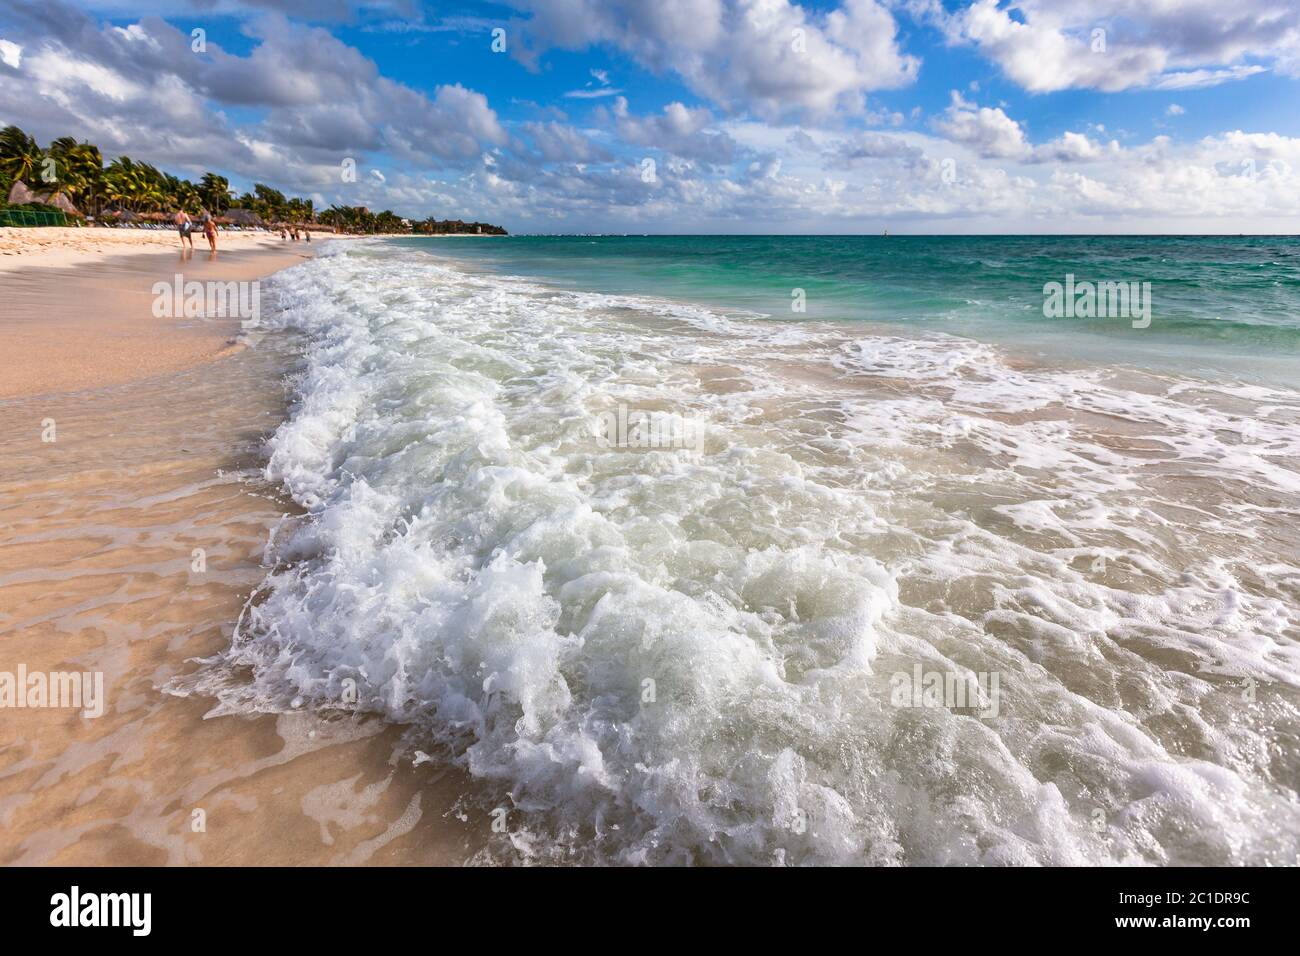 Mar dei Caraibi, Rivera Maya spiaggia Foto Stock